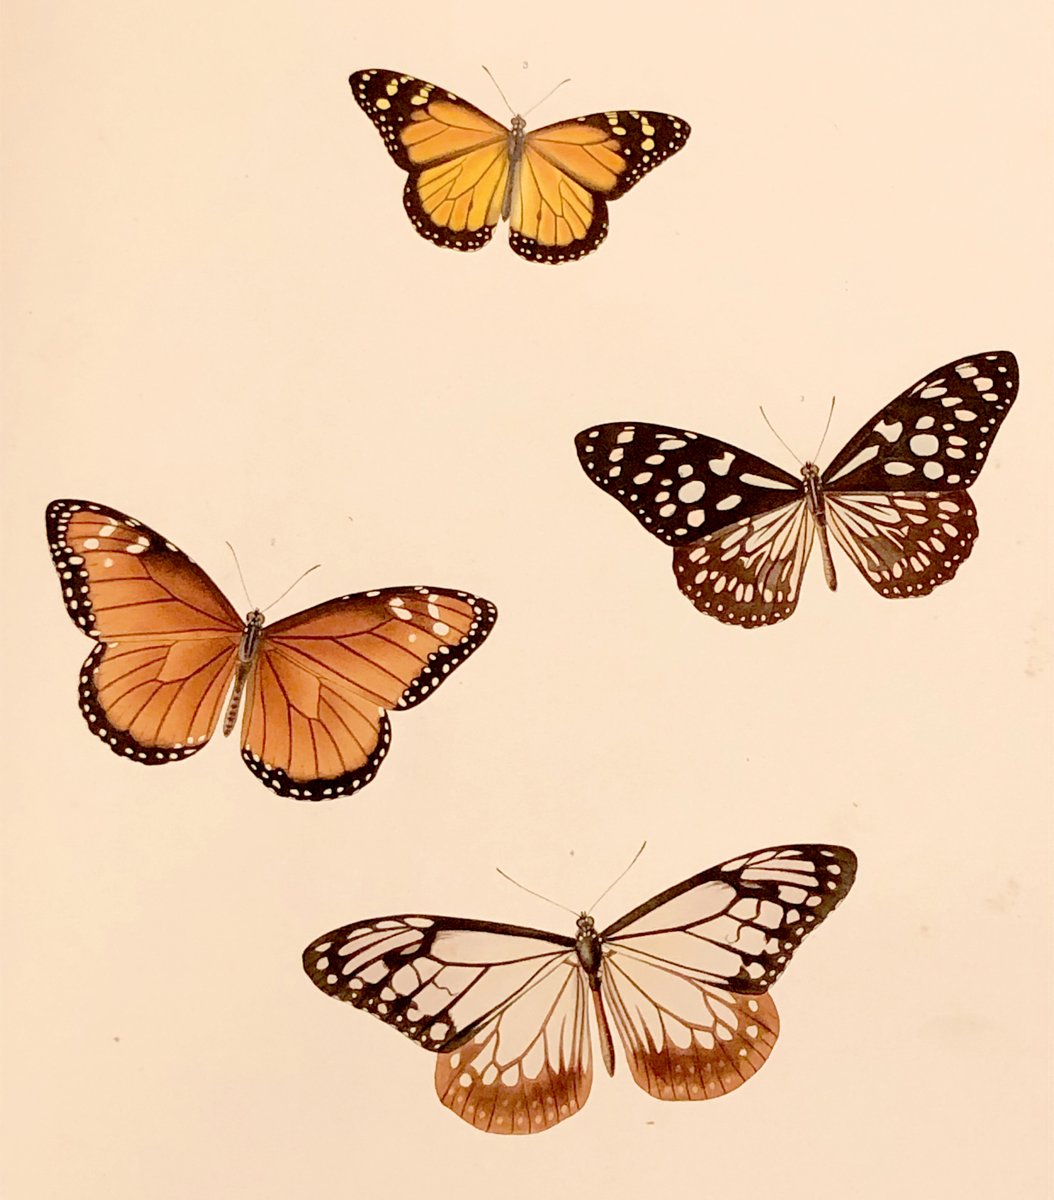 Aesthetic Orange Butterfly Wallpapers